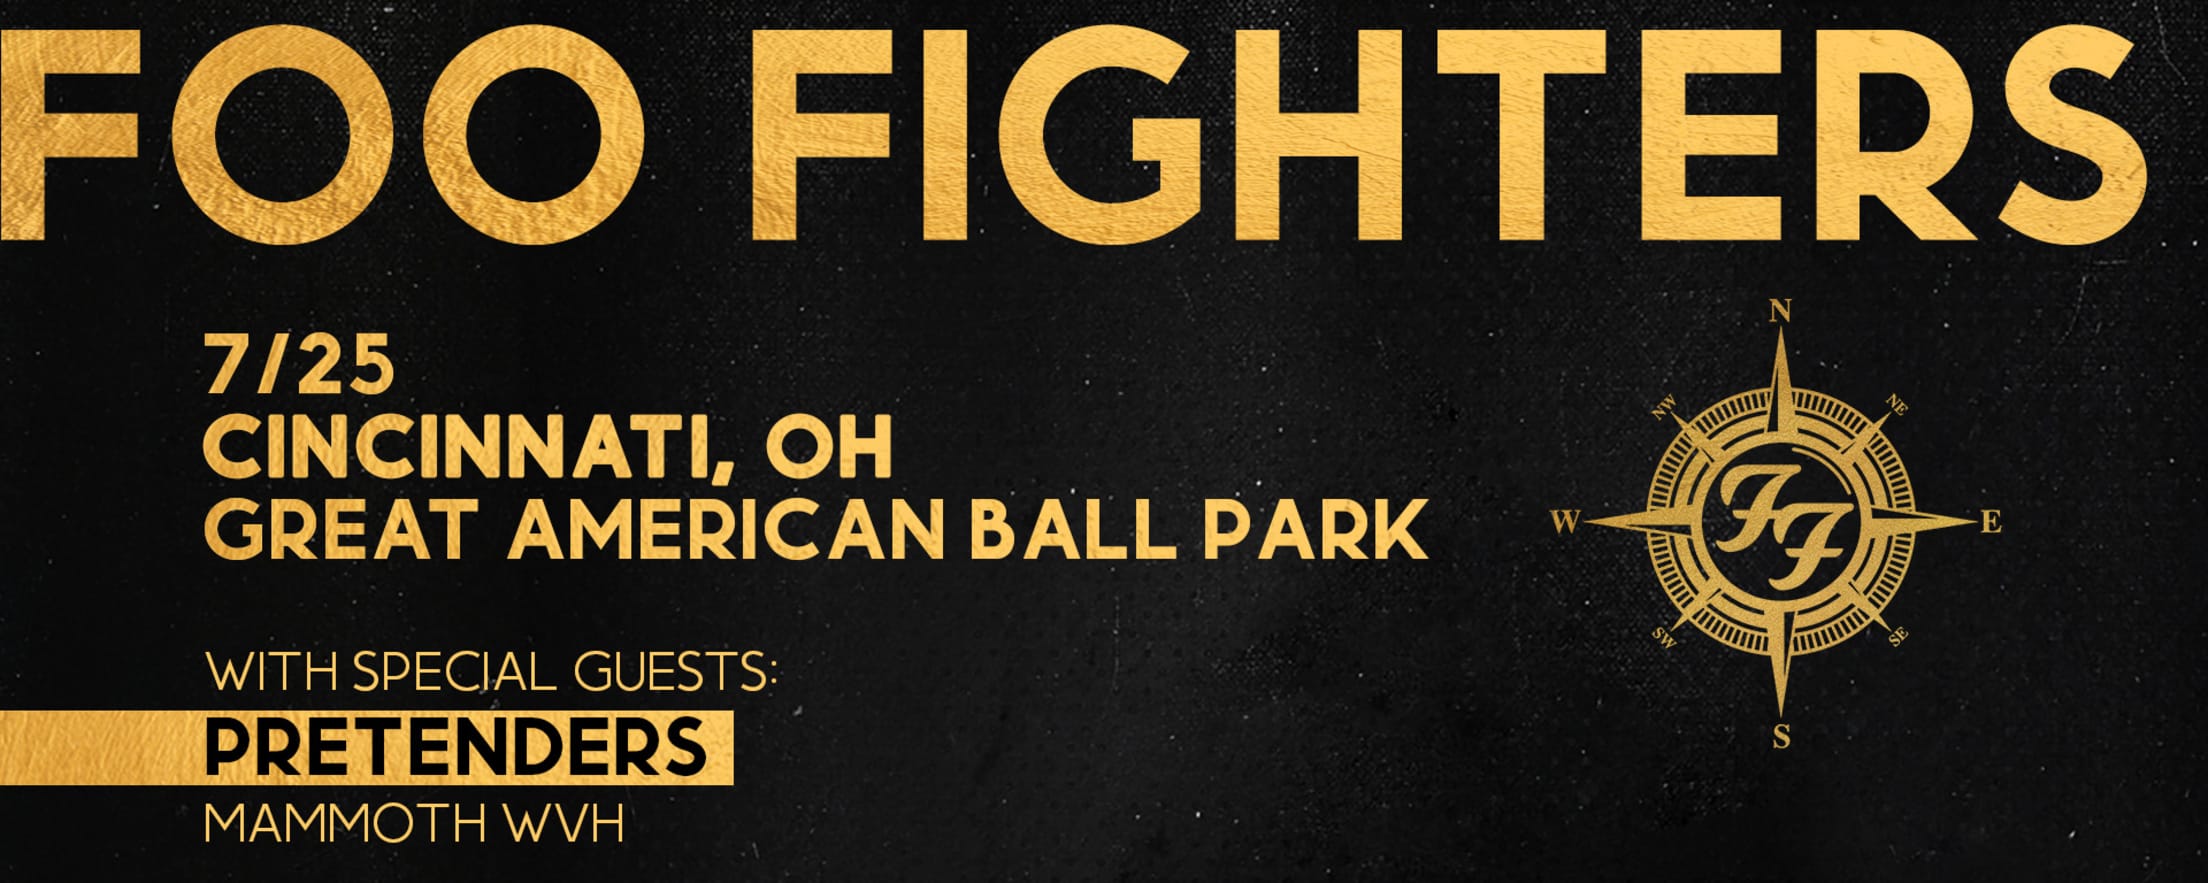 Cincinnati, Ohio, August 29, 2020: Great American Ball Park